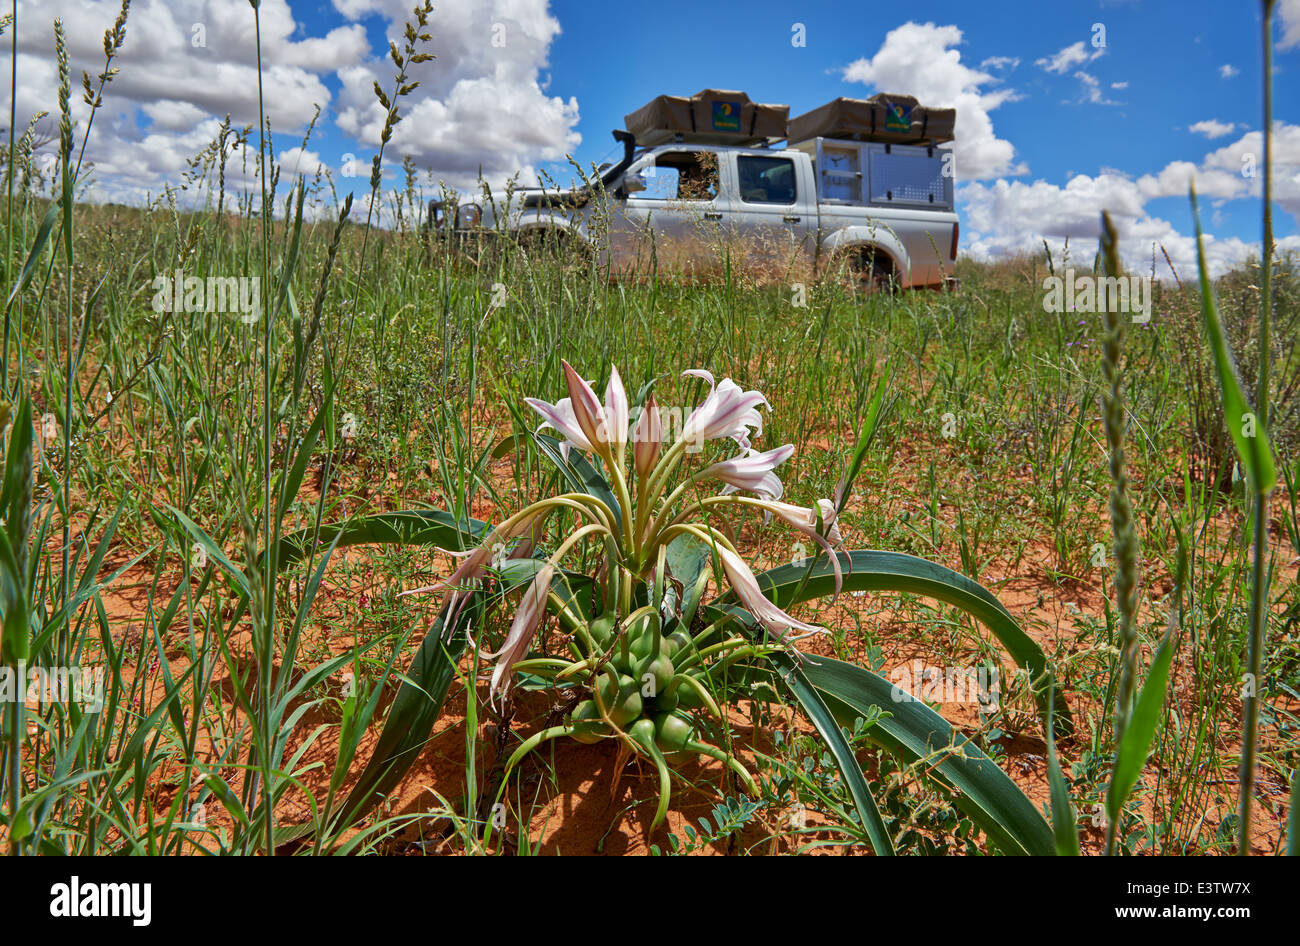 Lilie Blume in Landschaft mit 4 x 4 Geländewagen, Kgalagadi Transfrontier Park, Kalahari, Südafrika, Botswana, Afrika Stockfoto